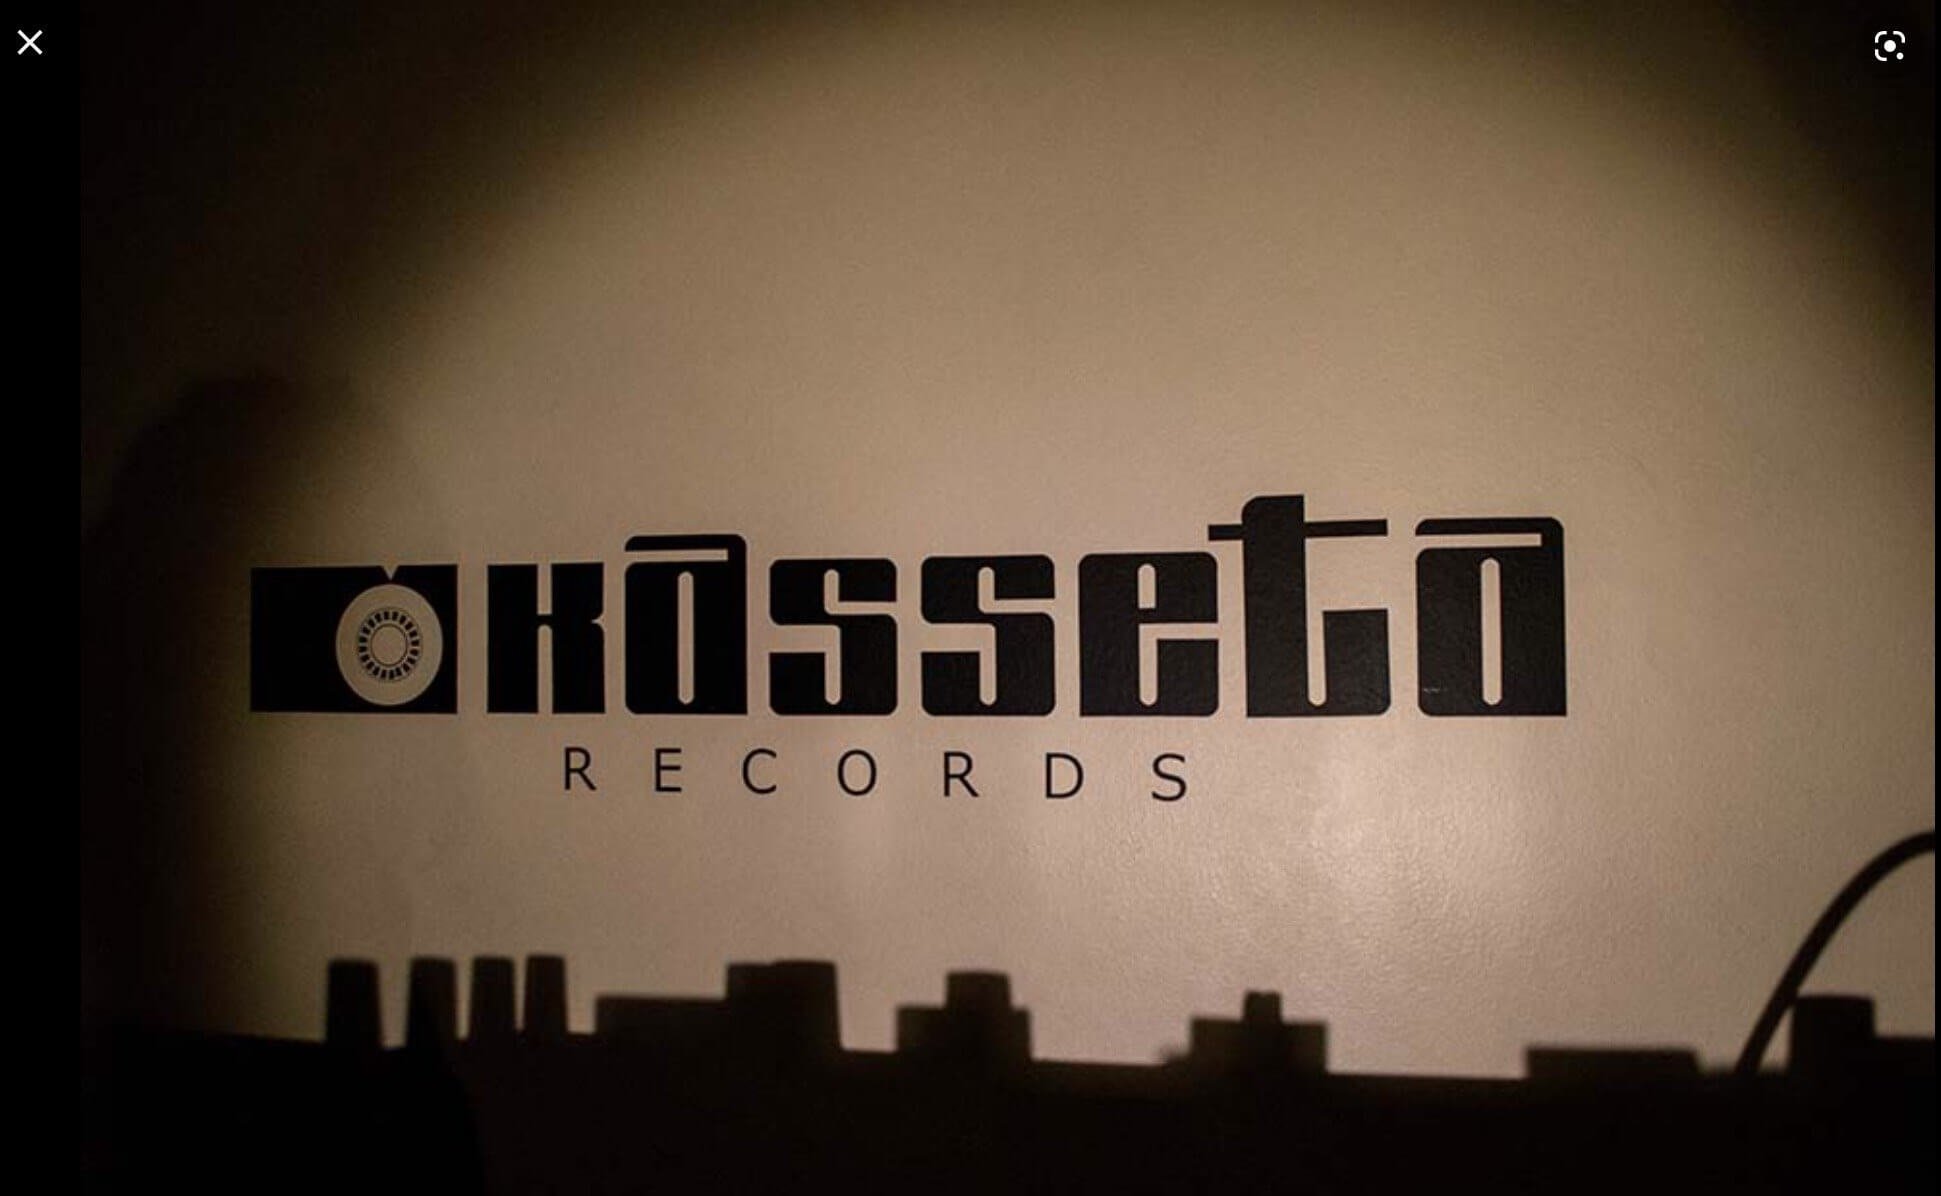 kasseta records